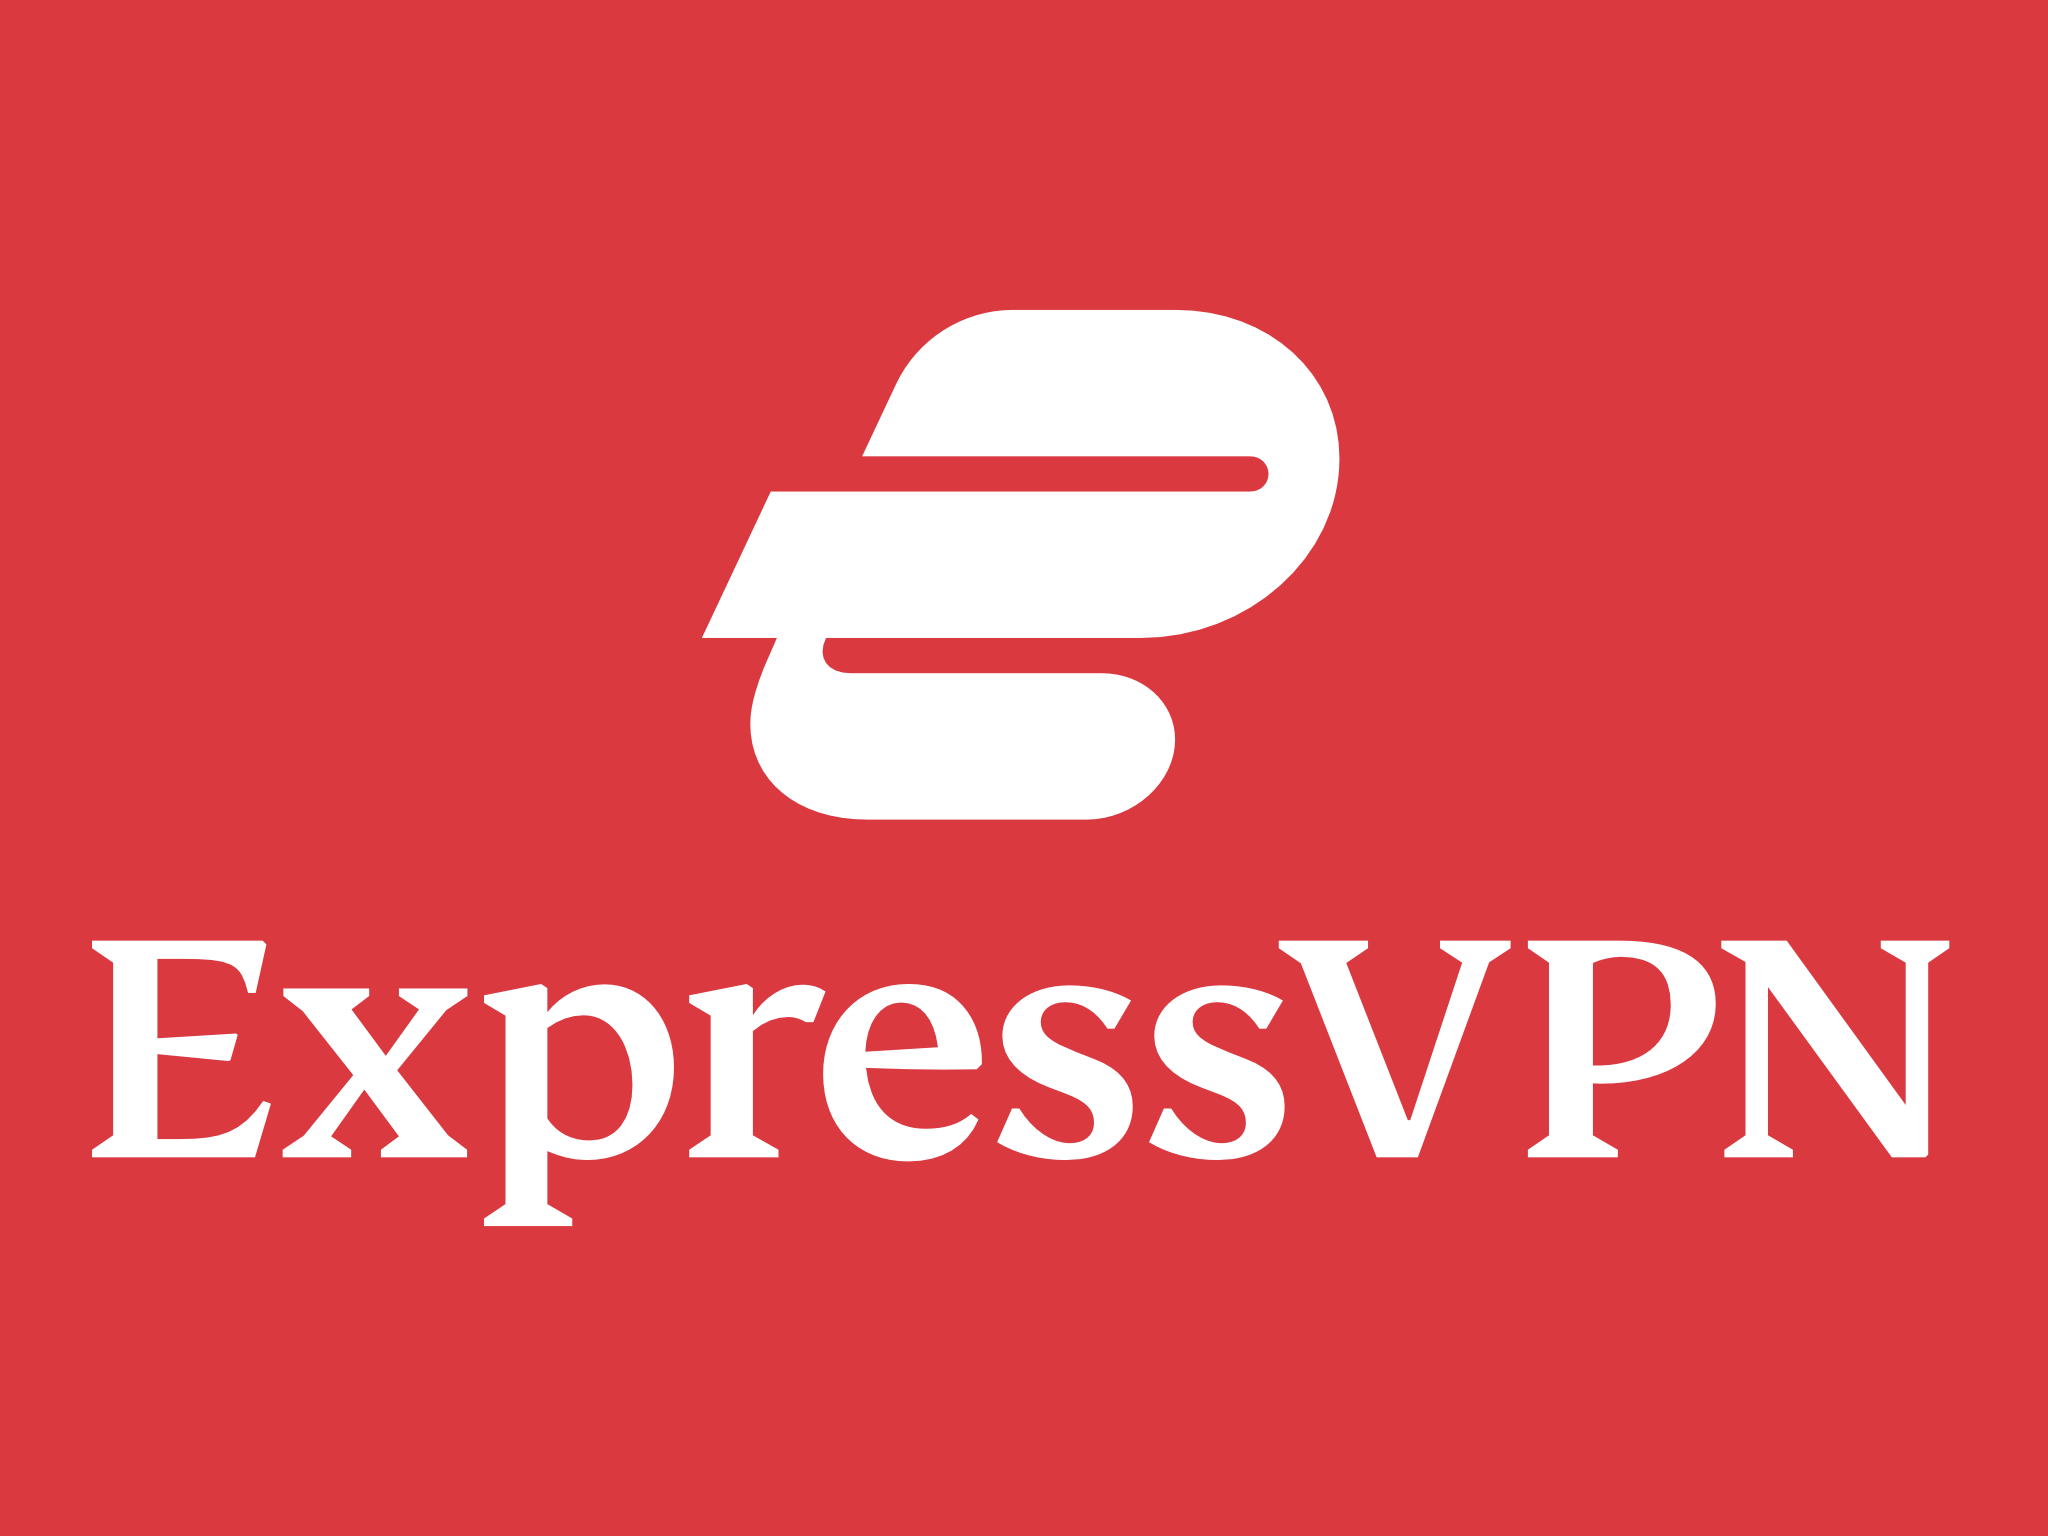 express vp n